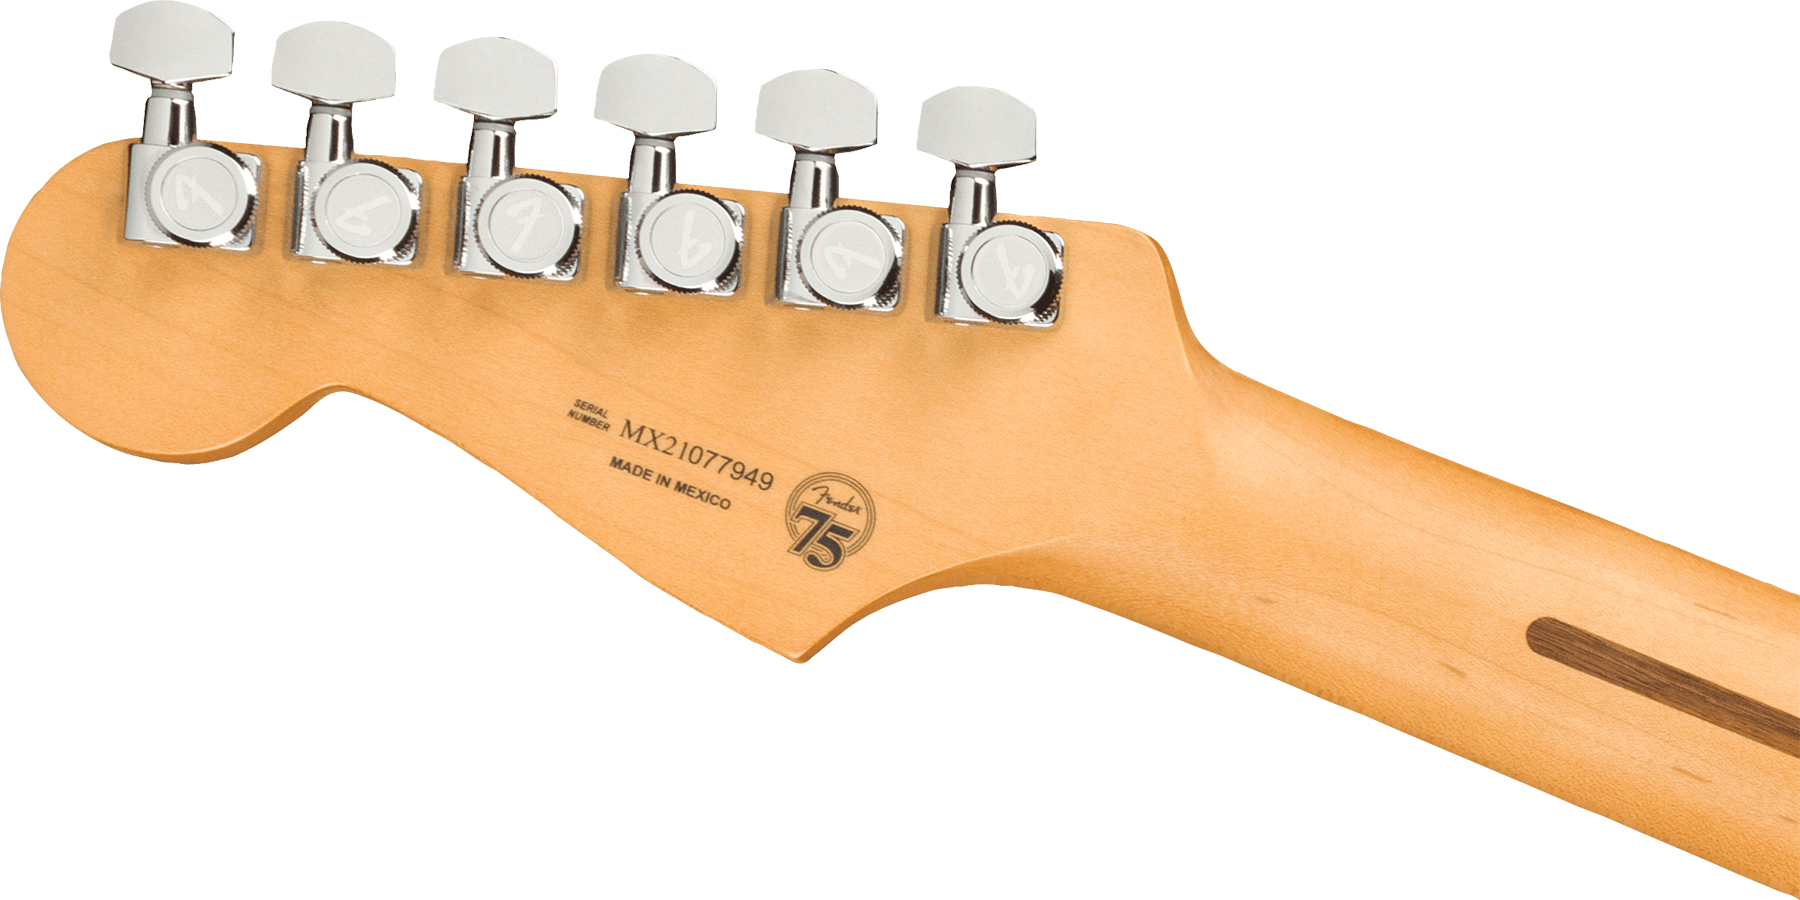 Fender Strat Player Plus Mex 3s Trem Mn - 3-color Sunburst - Elektrische gitaar in Str-vorm - Variation 3